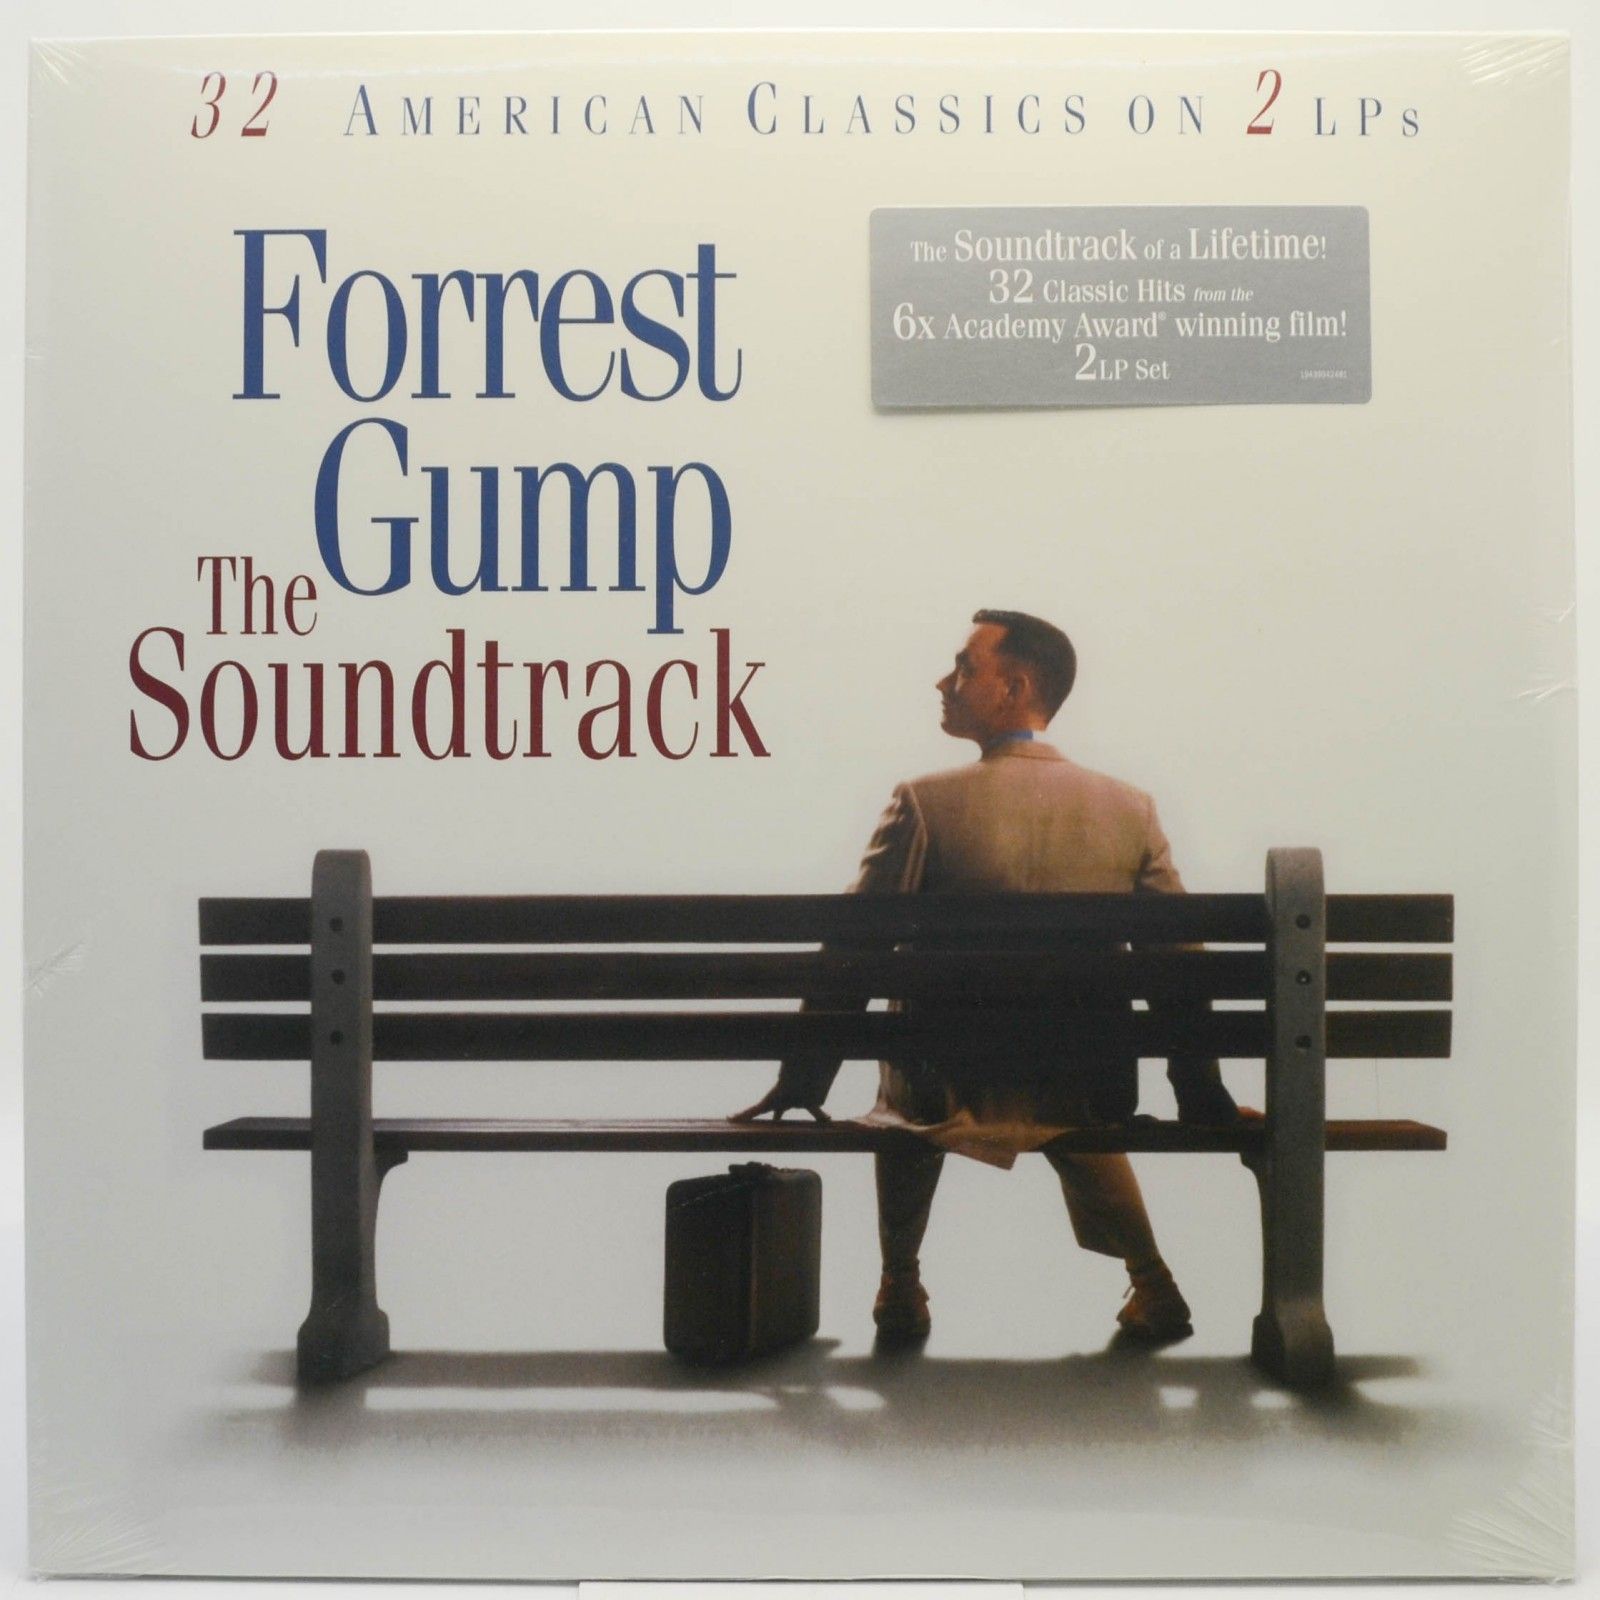 Various — Forrest Gump (The Soundtrack) (2LP), 1994